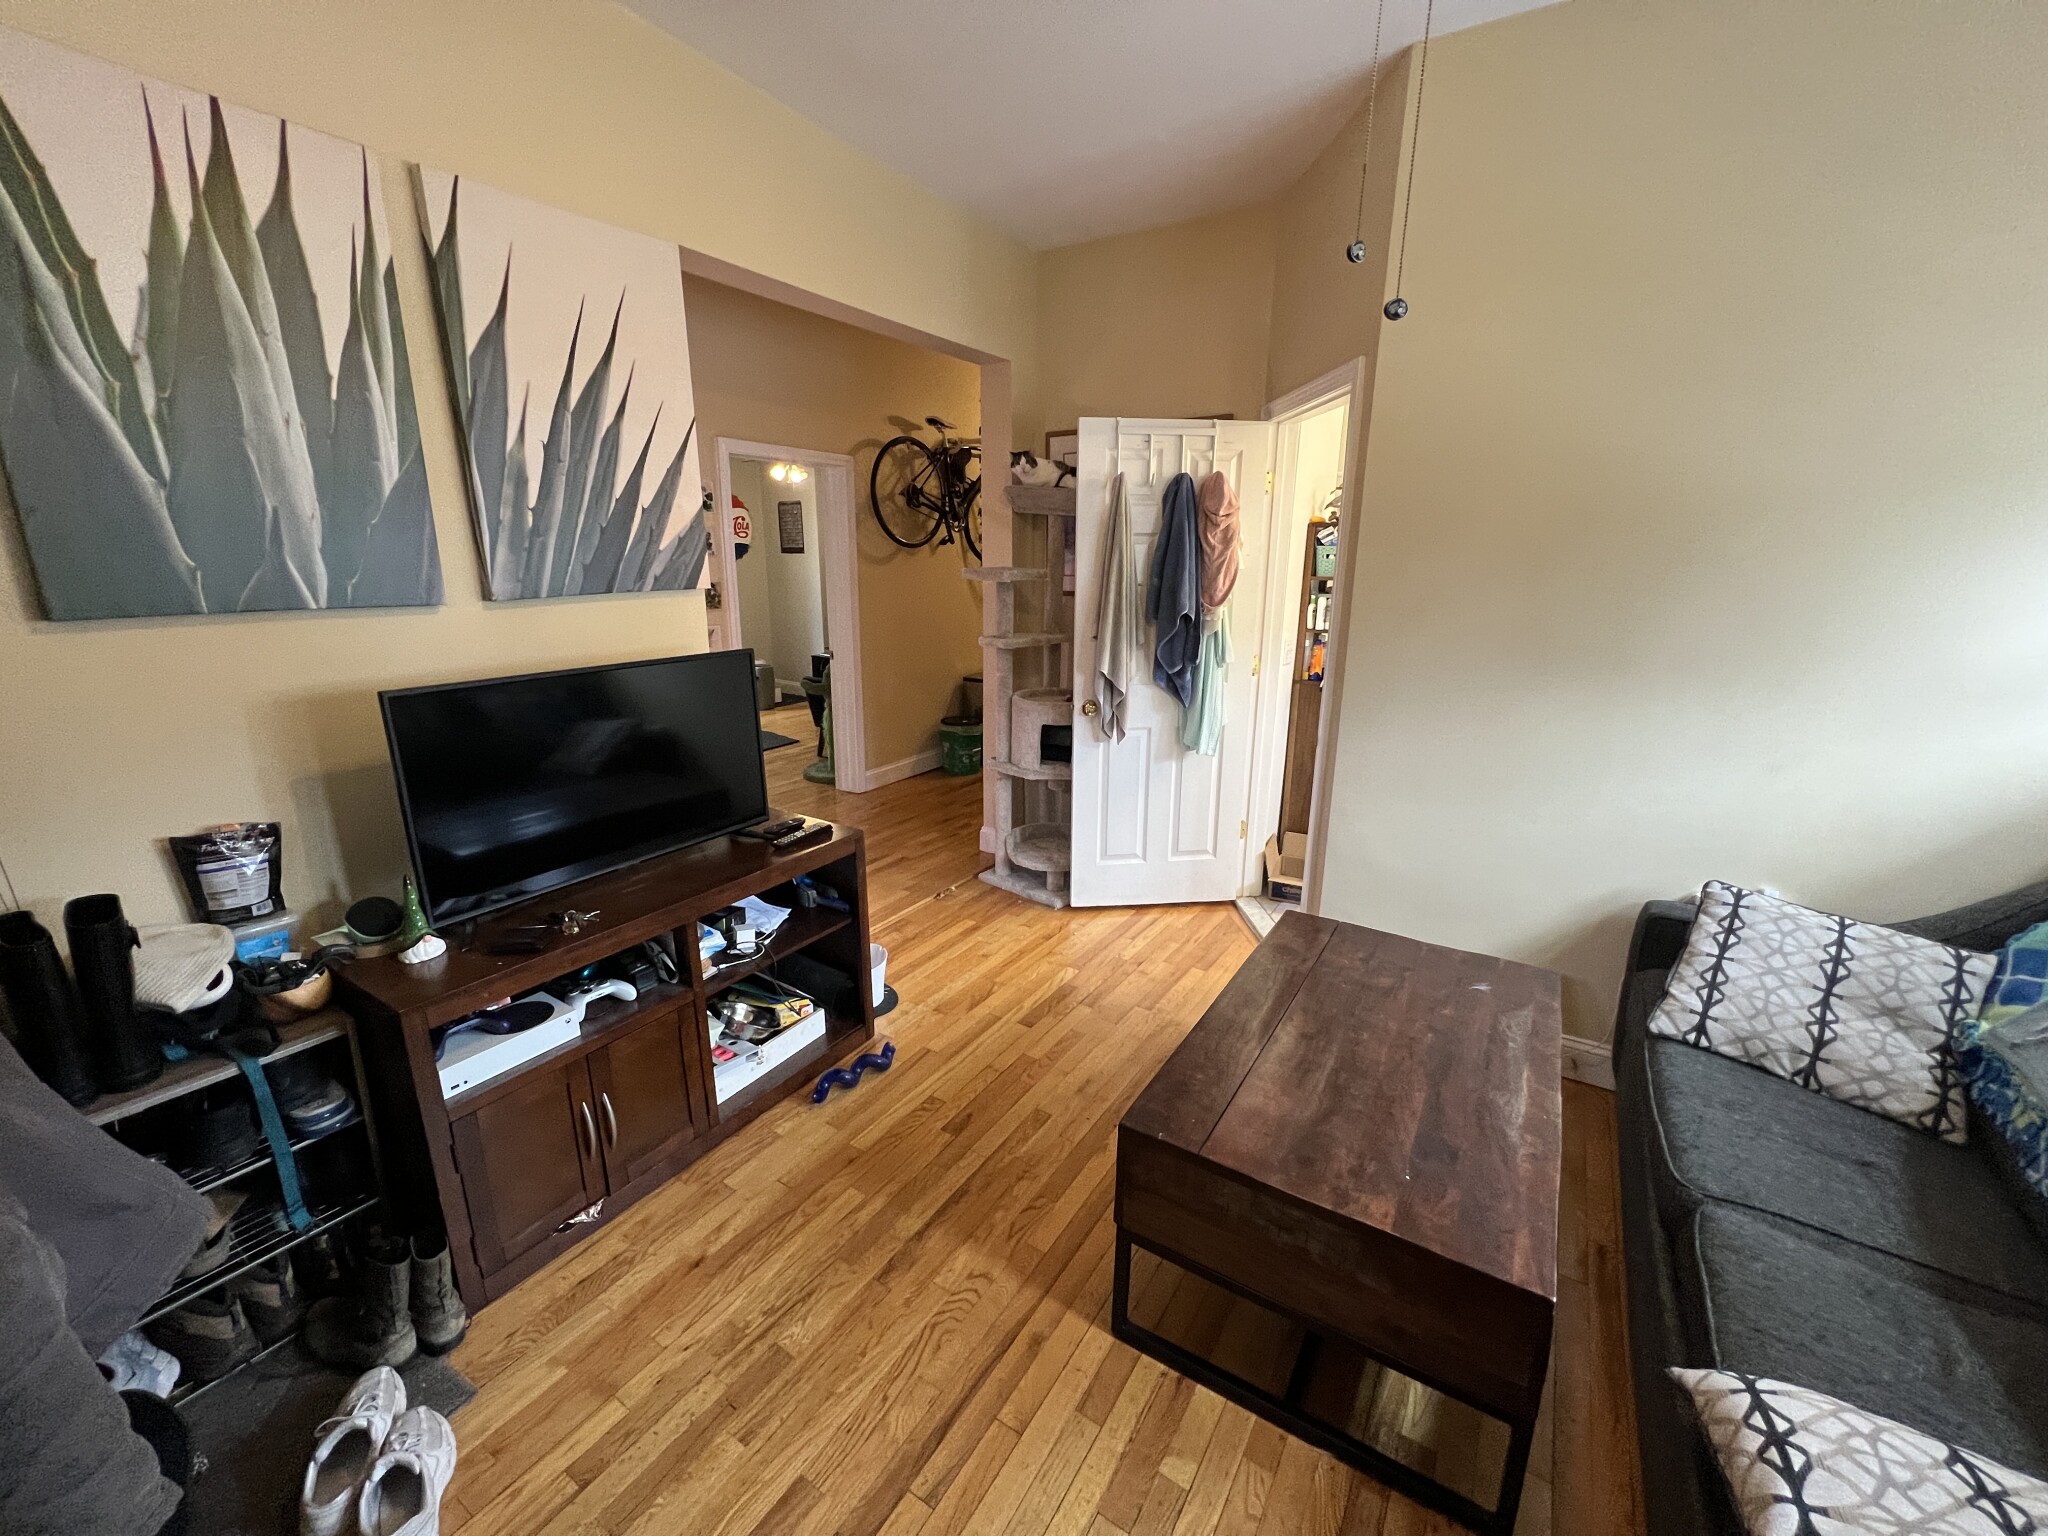 Photos of apartment on Burnham St.,Somerville MA 02144